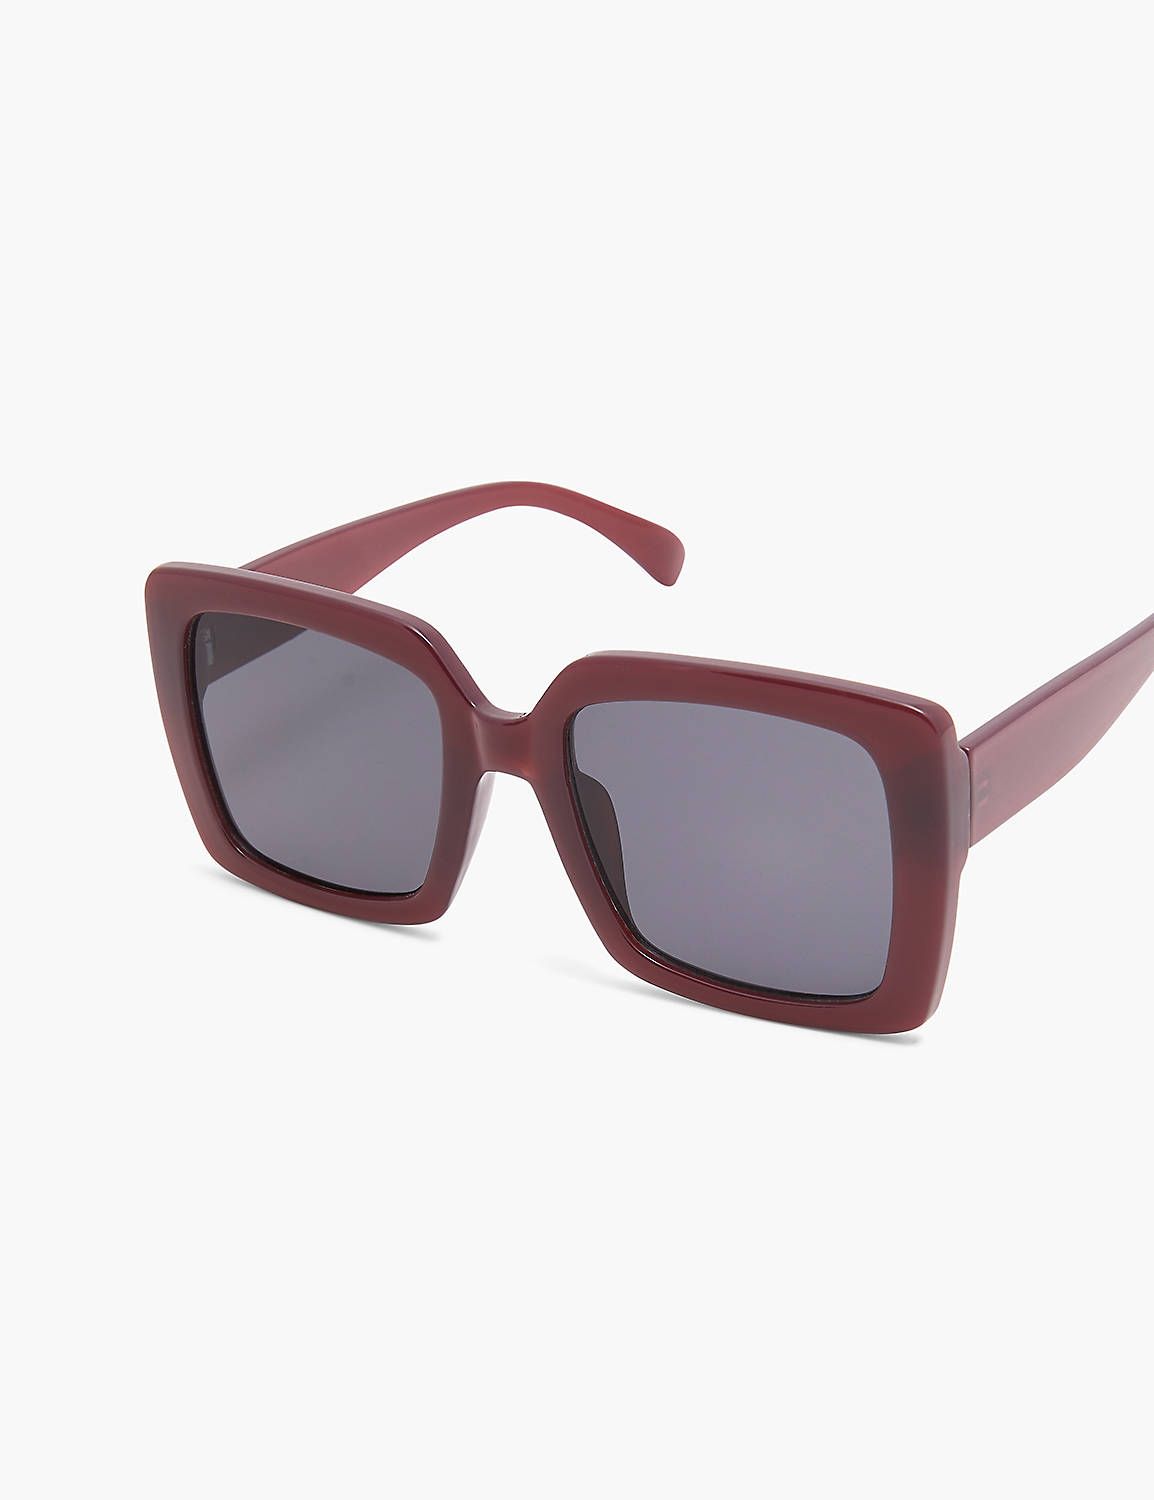 Maroon Square Sunglasses Product Image 1